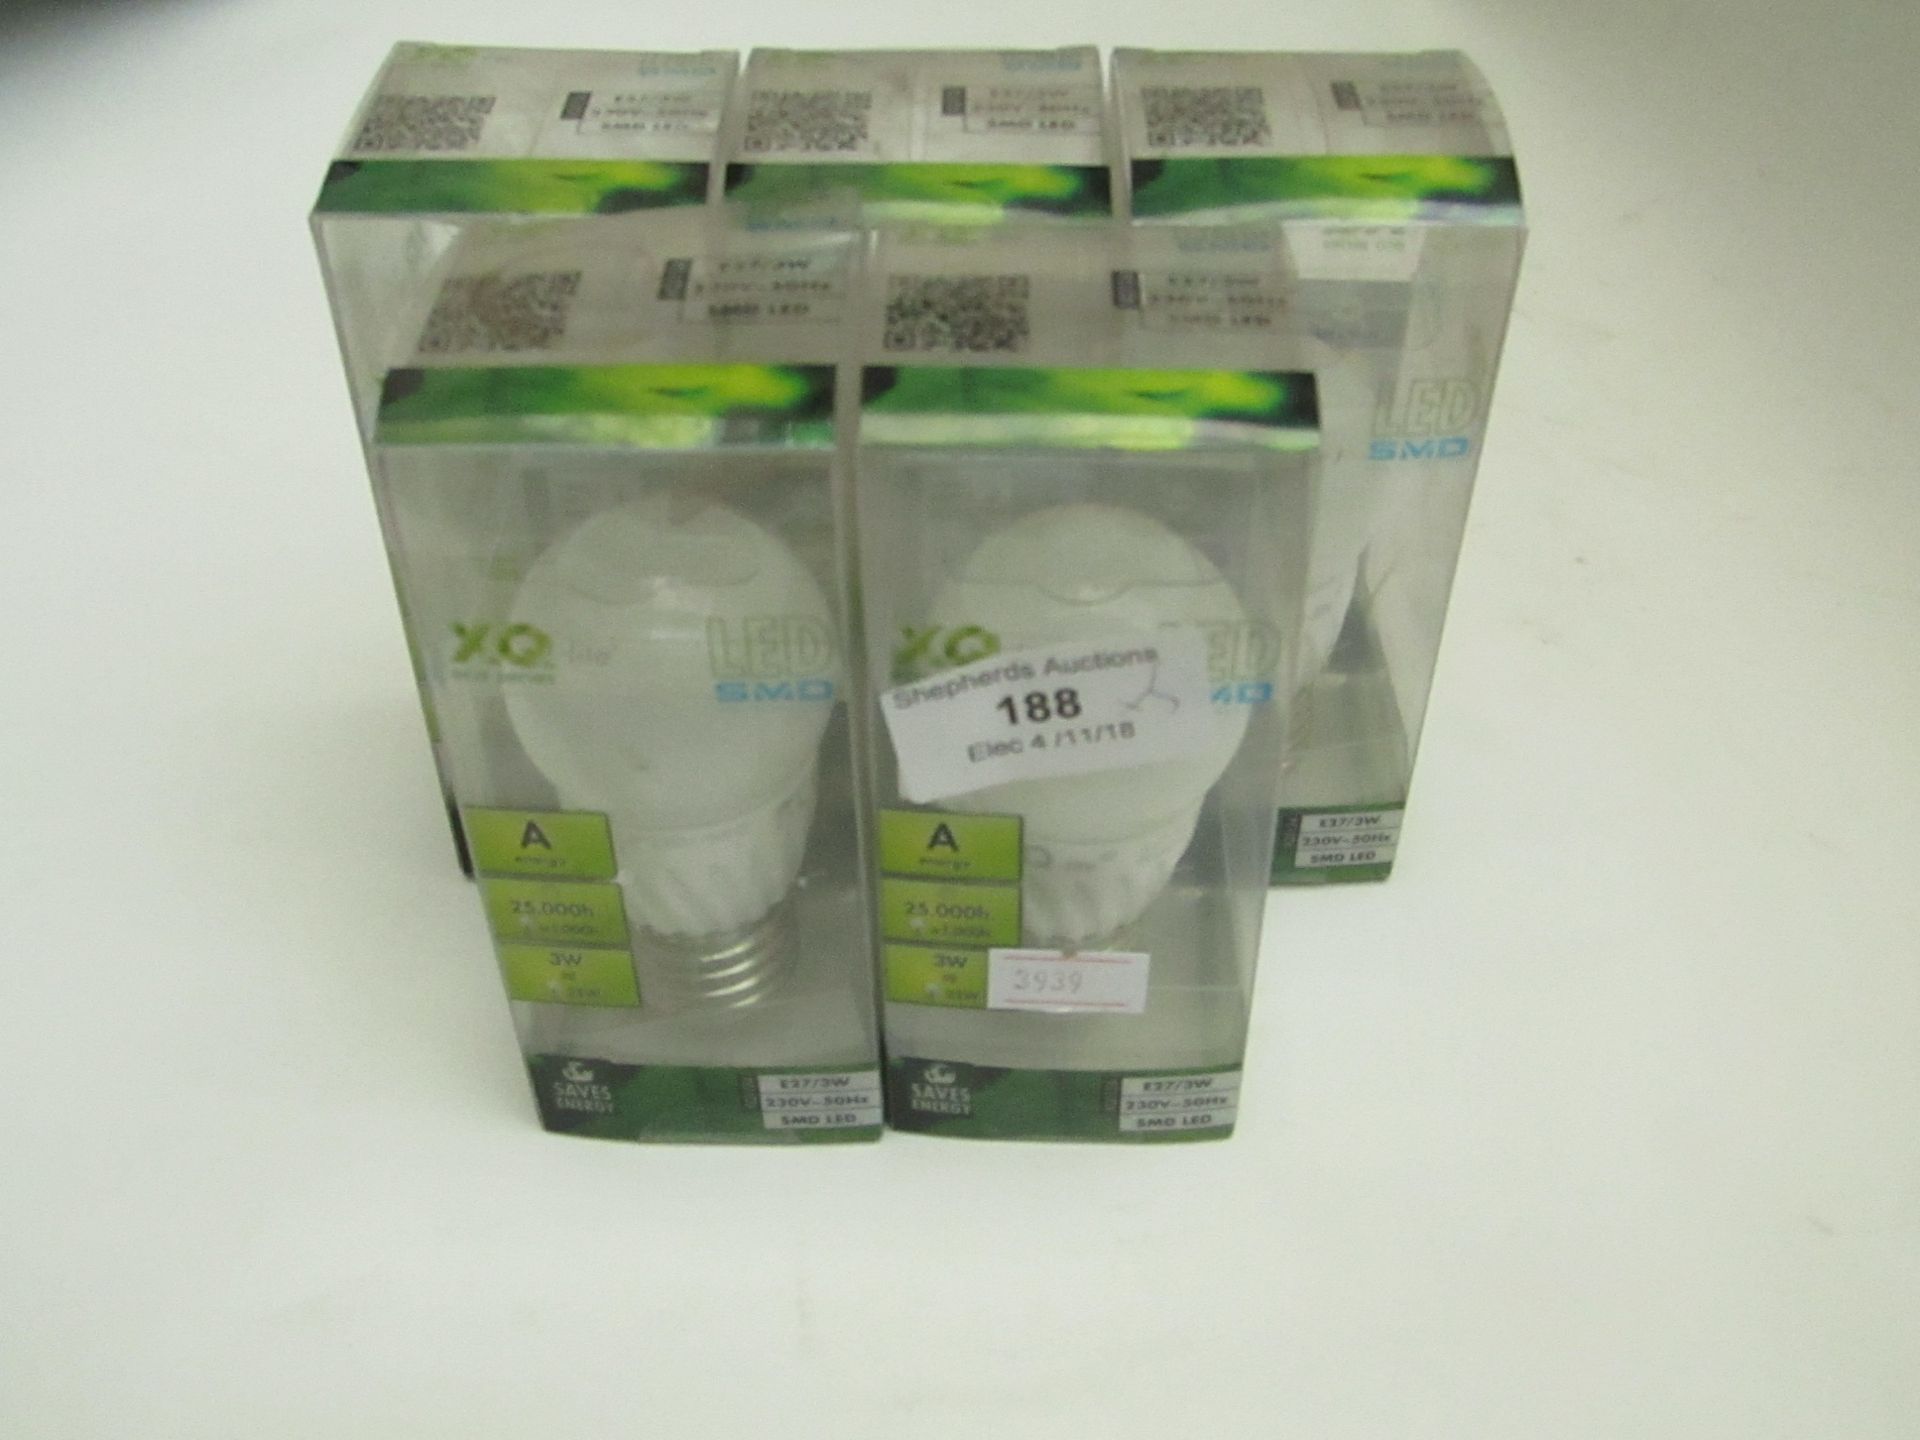 5x XQ E27 LED energy saving bulbs, new in packaging